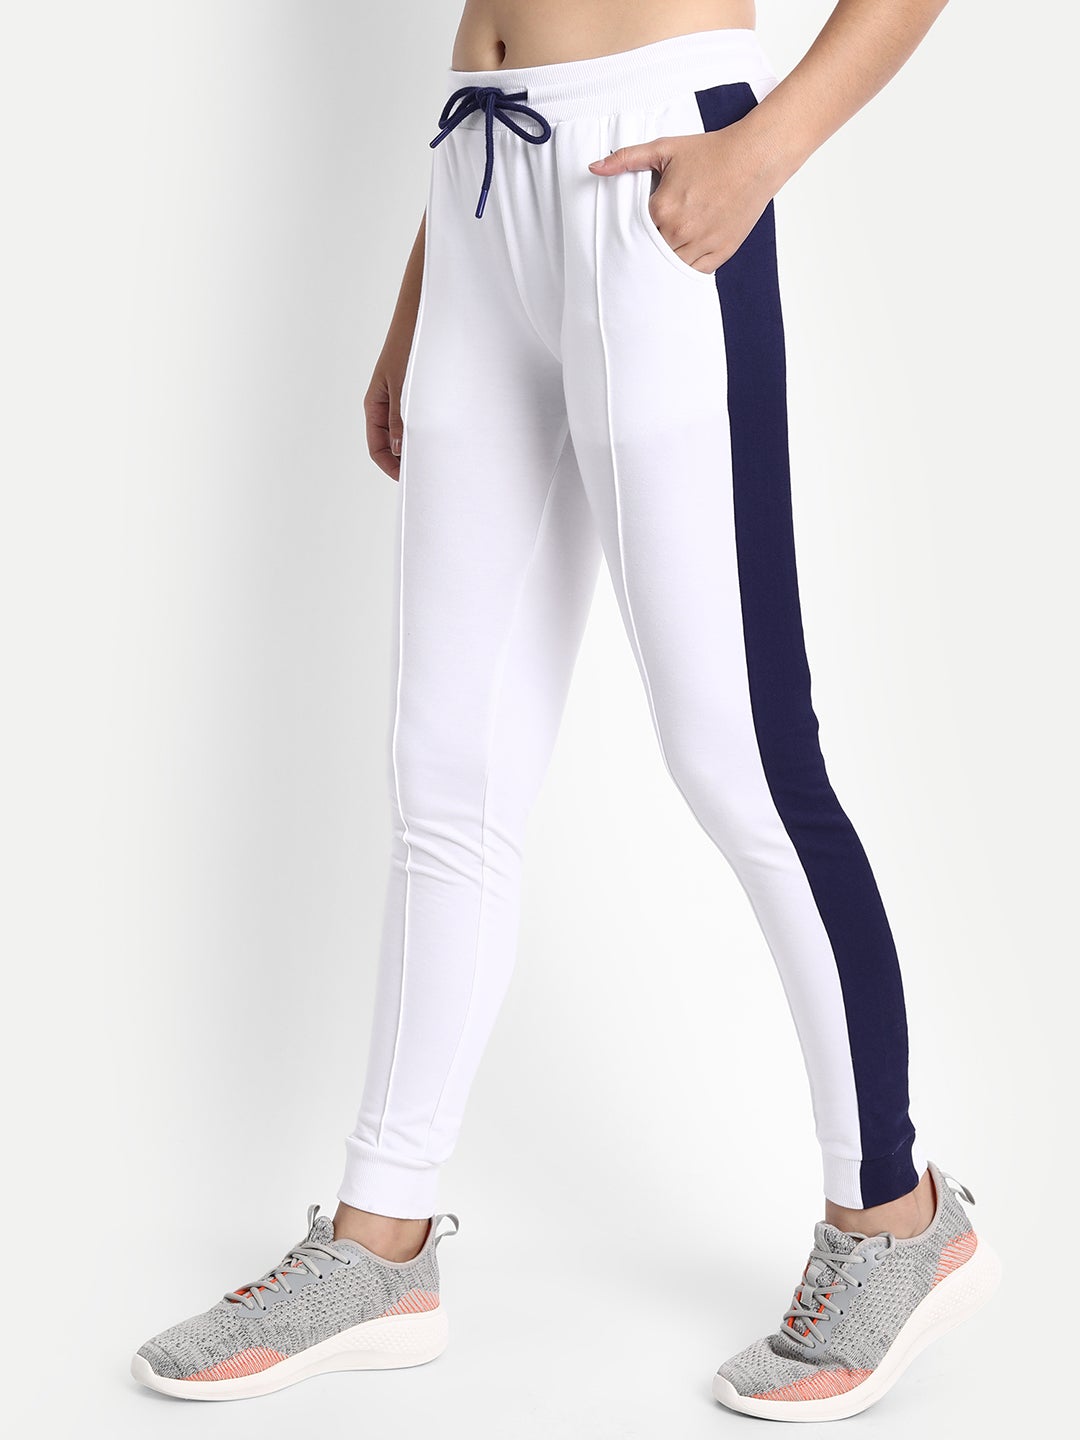 Smart Fit Women's Track Pants with Cotton-Rich Lycra